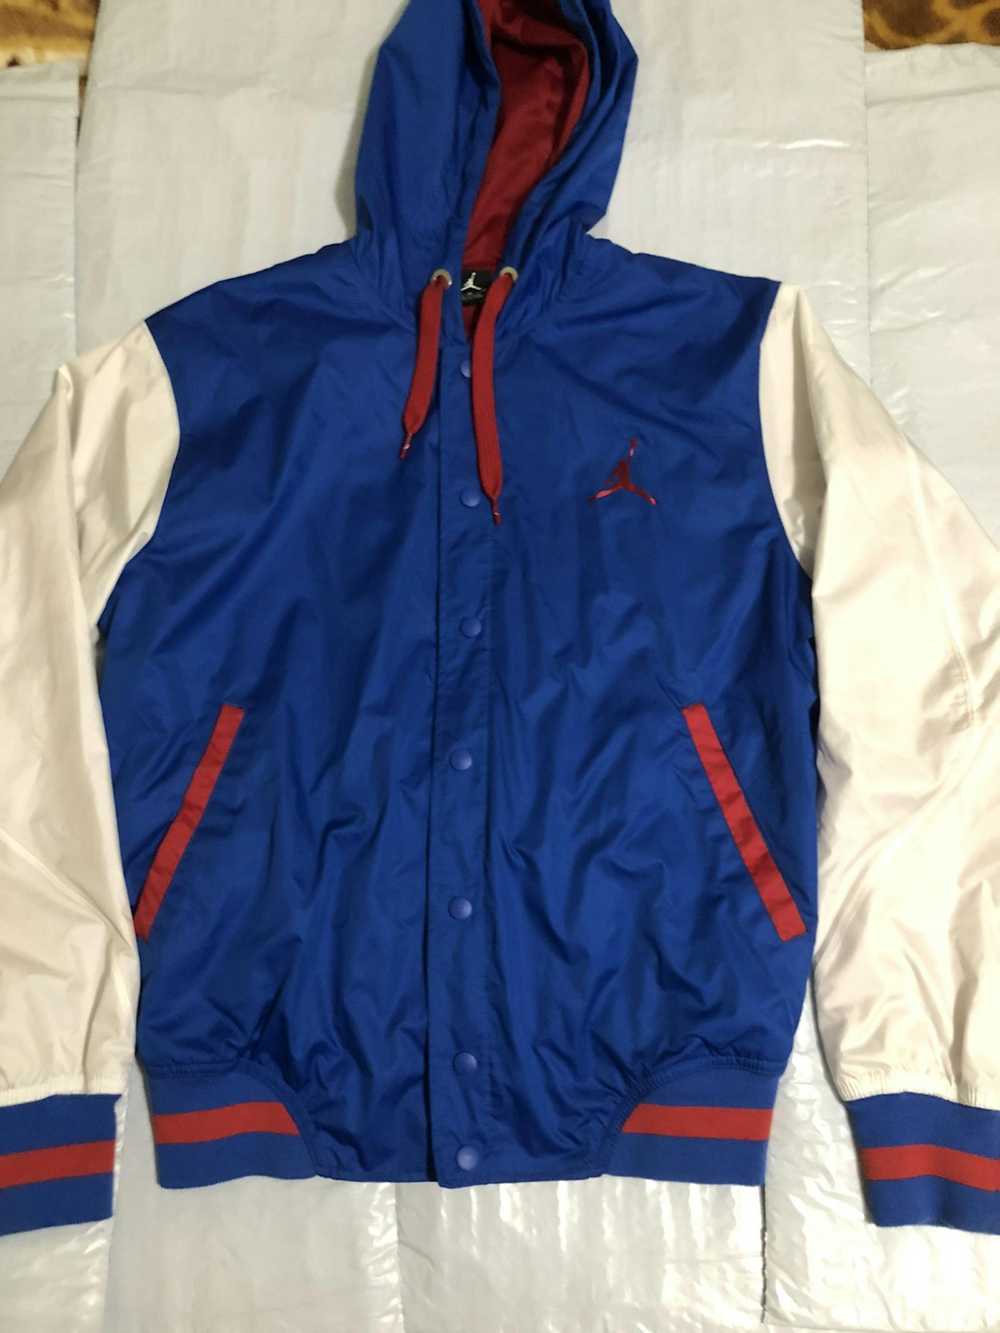 Jordan Brand Jordan jacket - image 1